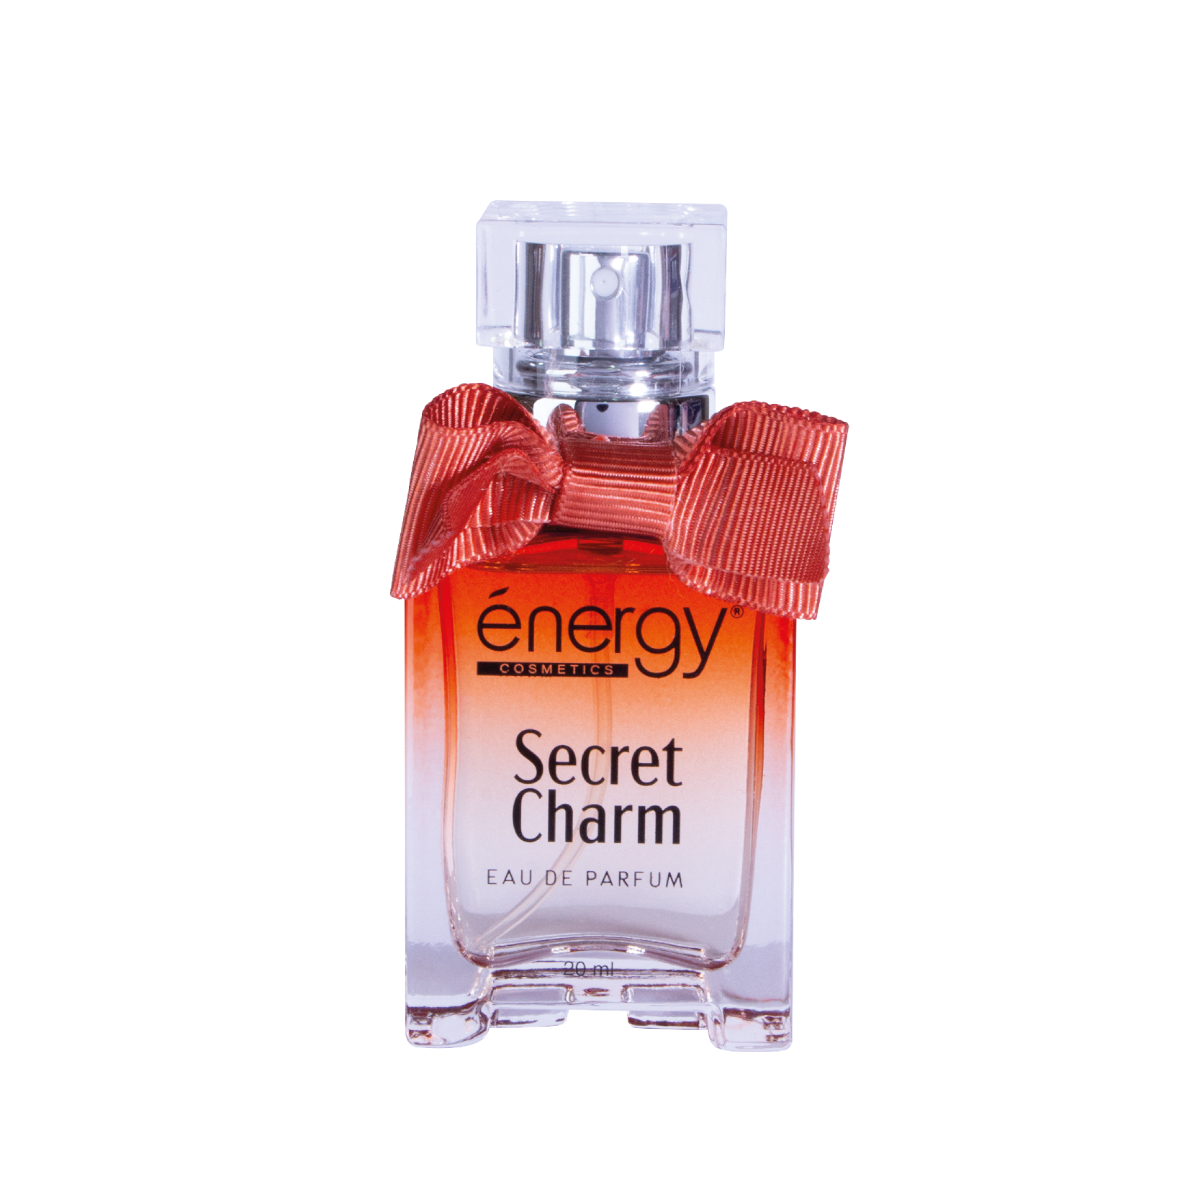 Energy Cosmetics Eau de Parfum | Buy 2 Temptation + Glamor and Get 1 Free Secret Charm 20ml